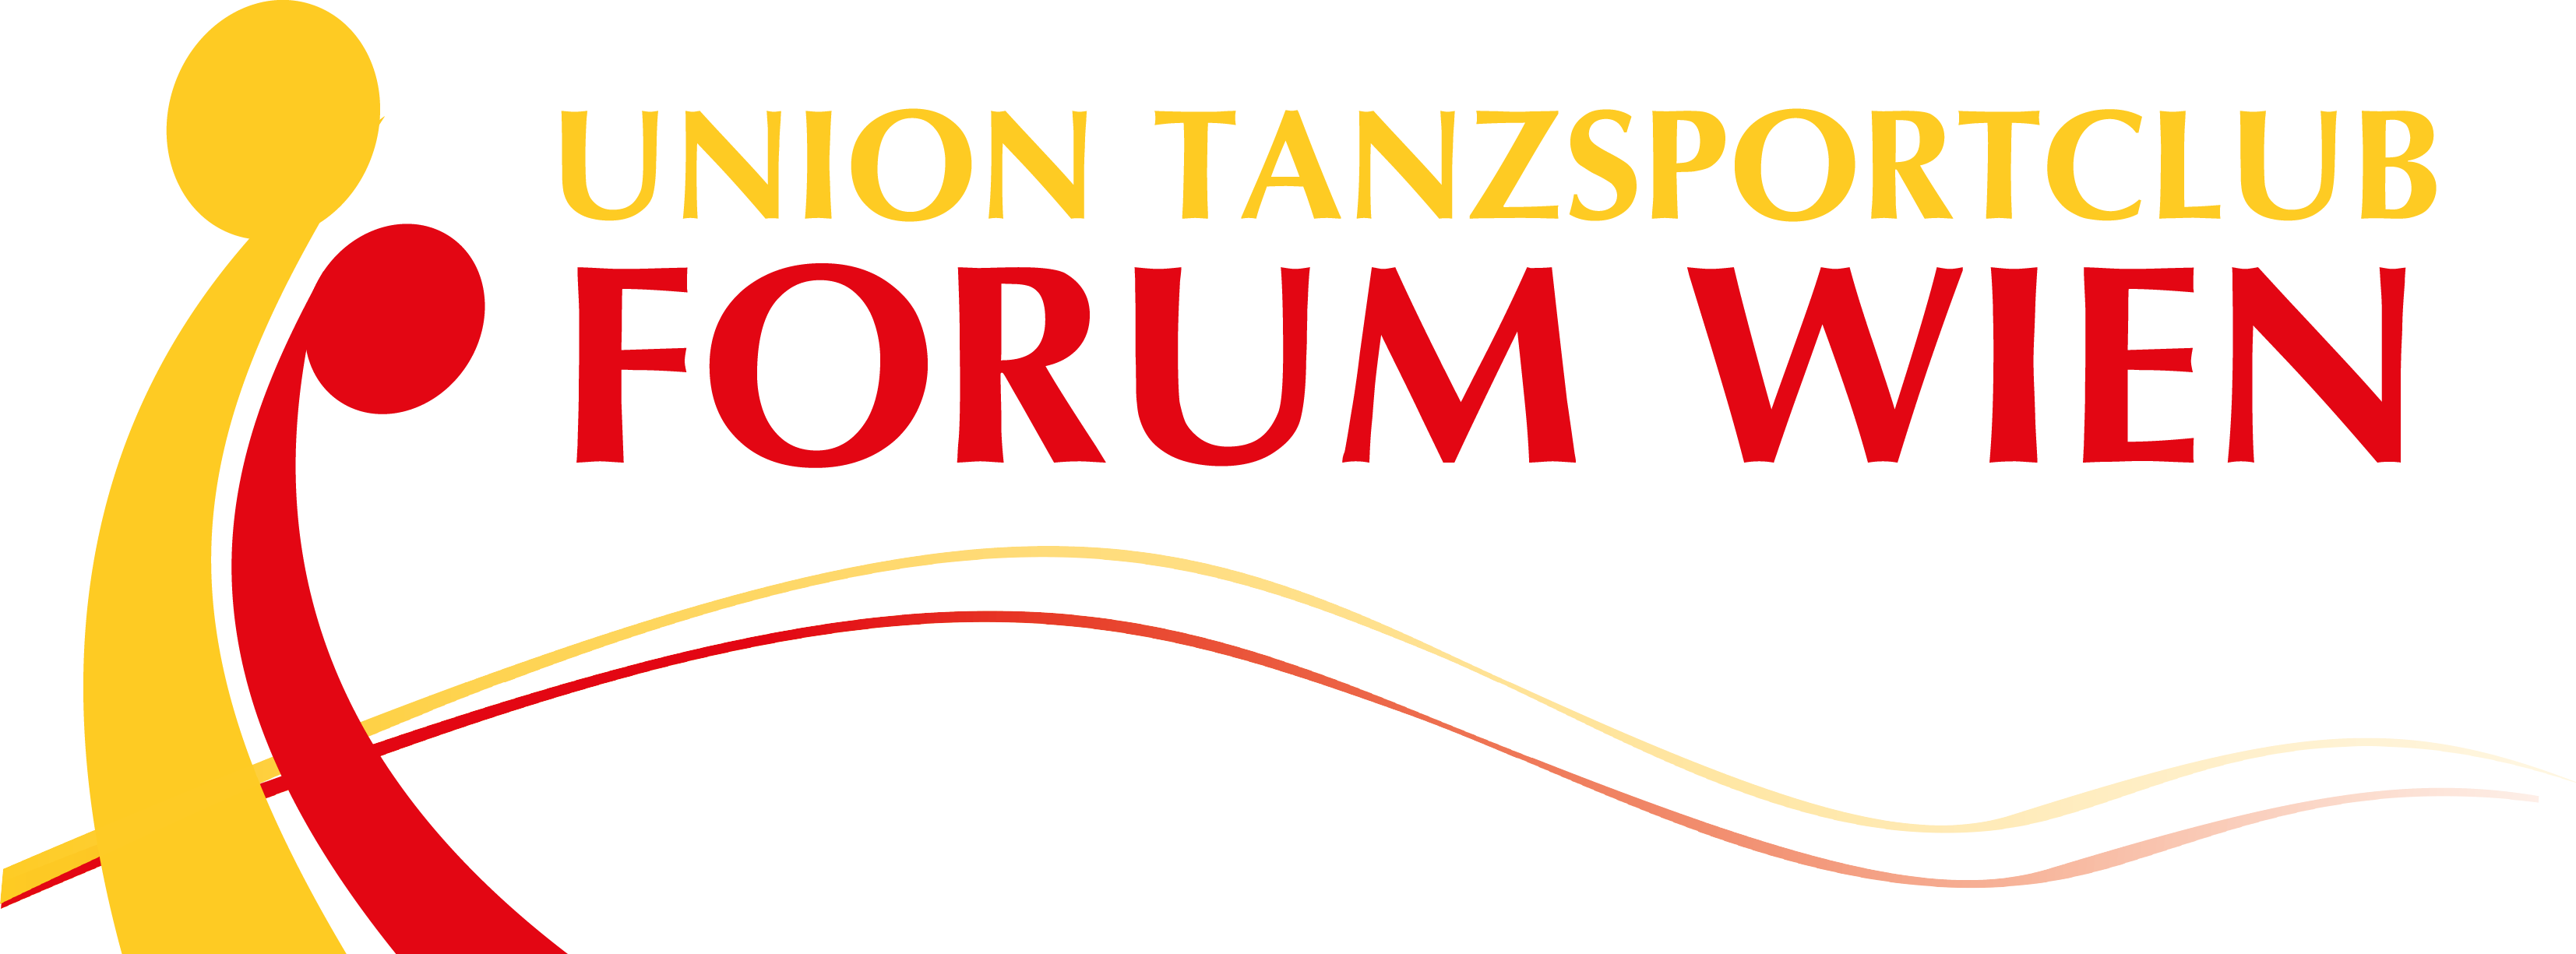 Union Tanzsportclub Forum Wien